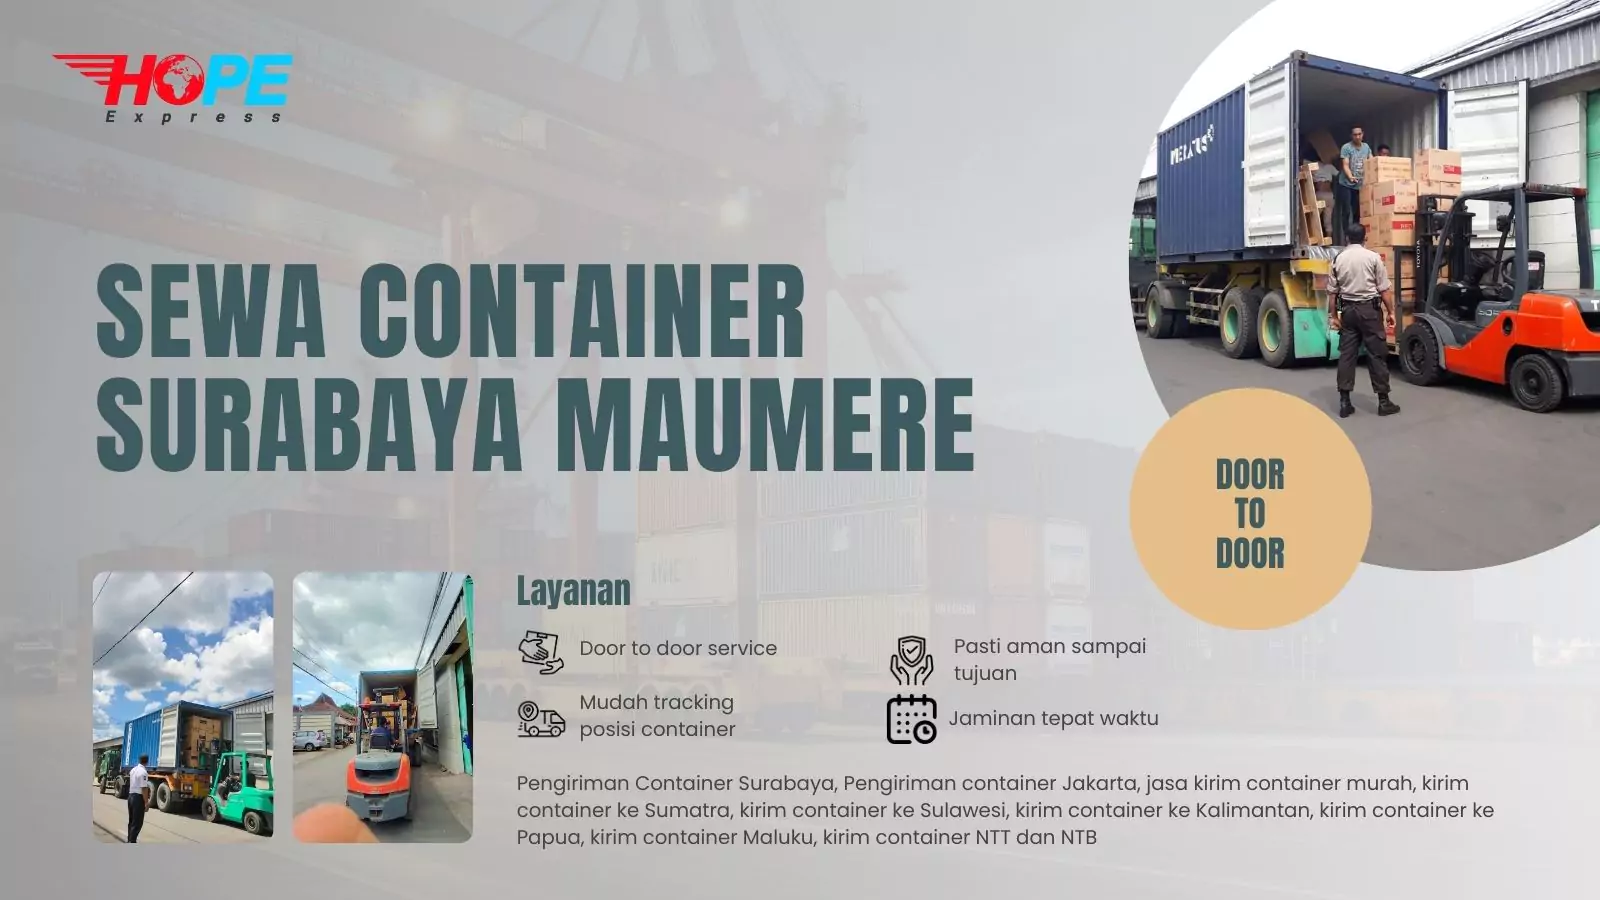 Sewa Container Surabaya Maumere